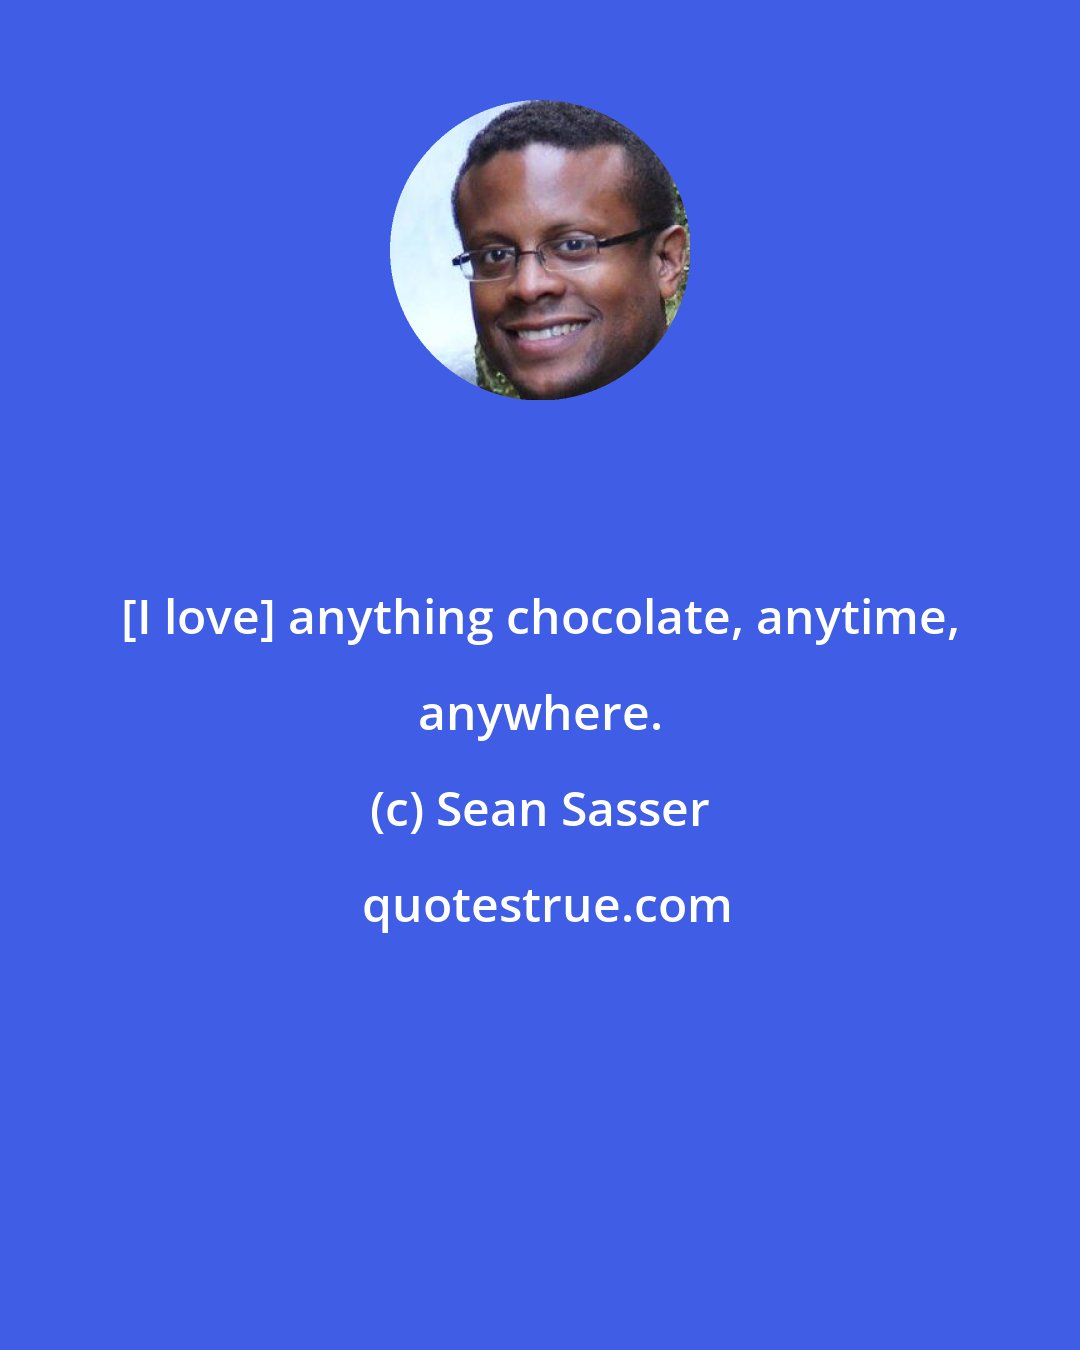 Sean Sasser: [I love] anything chocolate, anytime, anywhere.